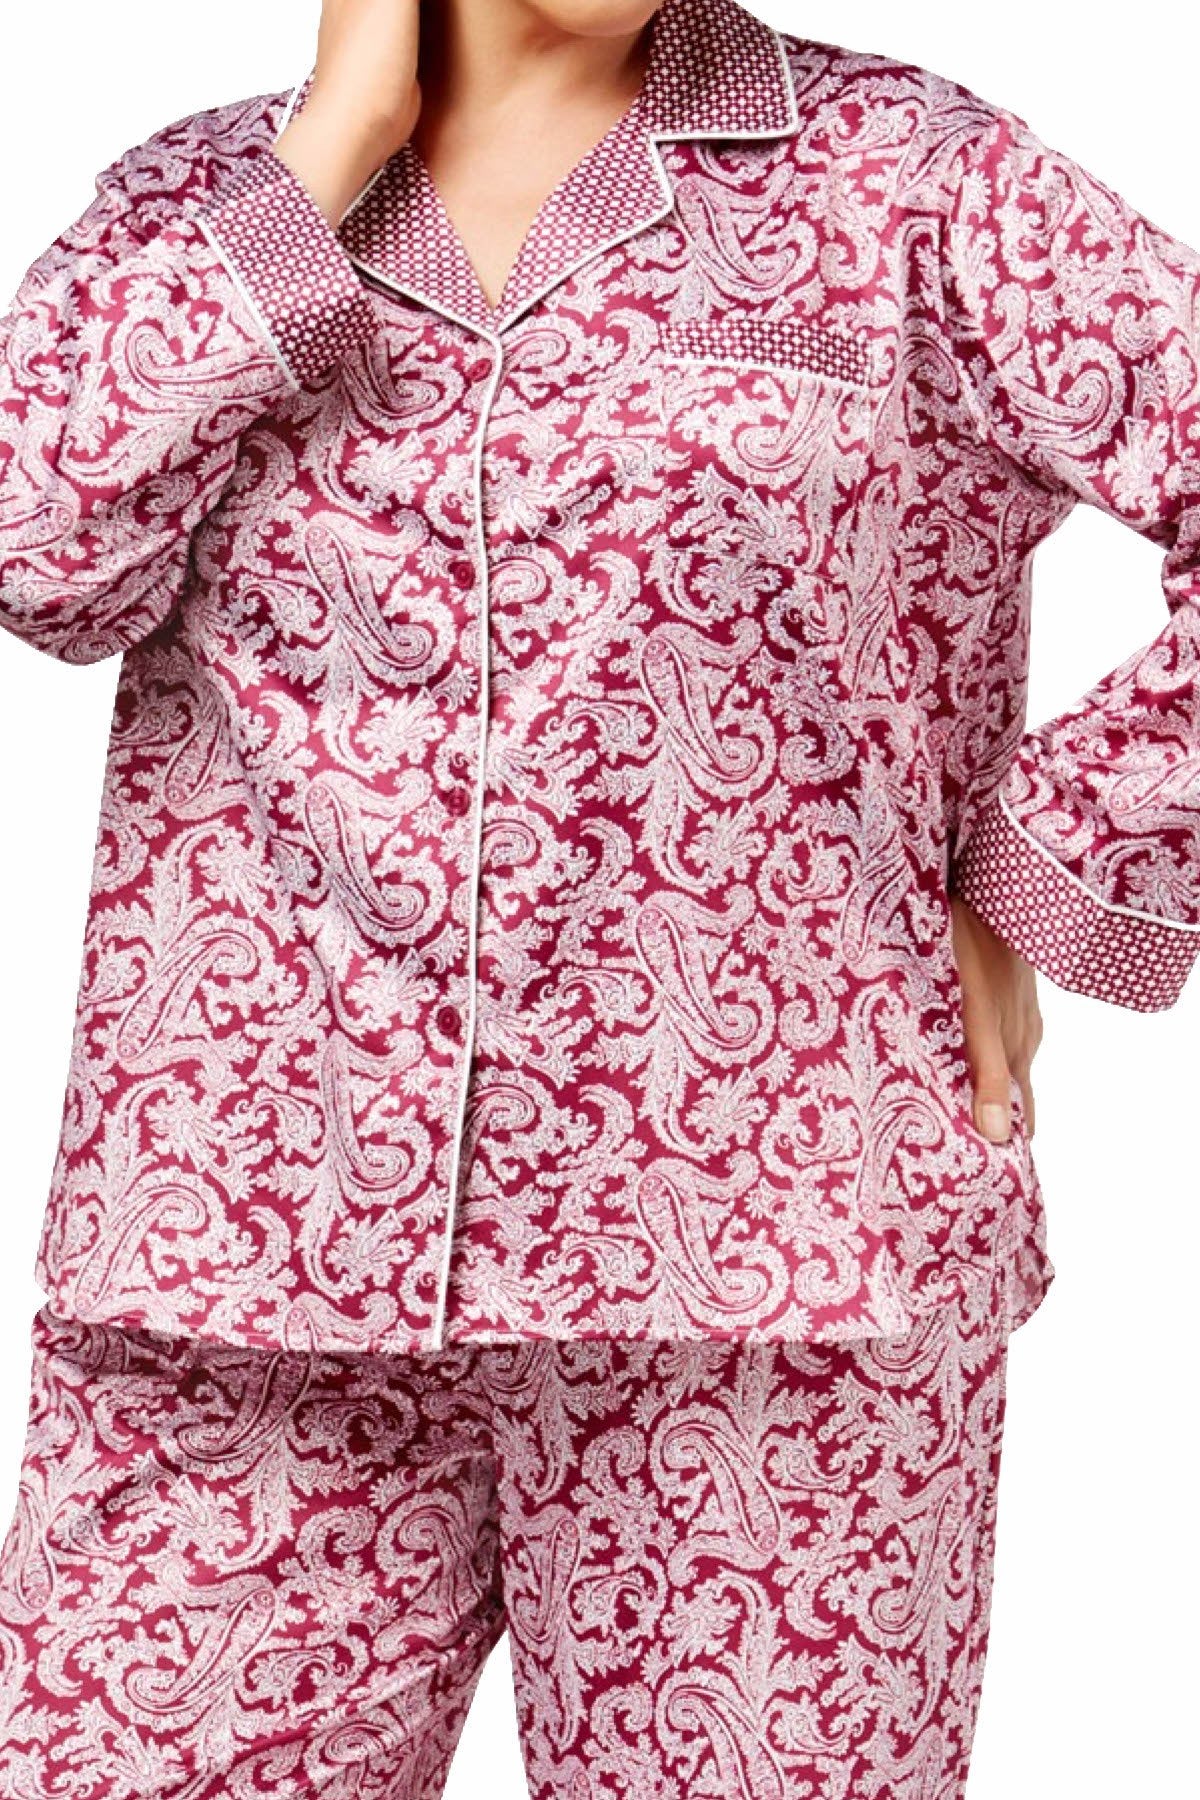 Miss Elaine PLUS Wine/Paisley Contrast-Cuff Pajama Set